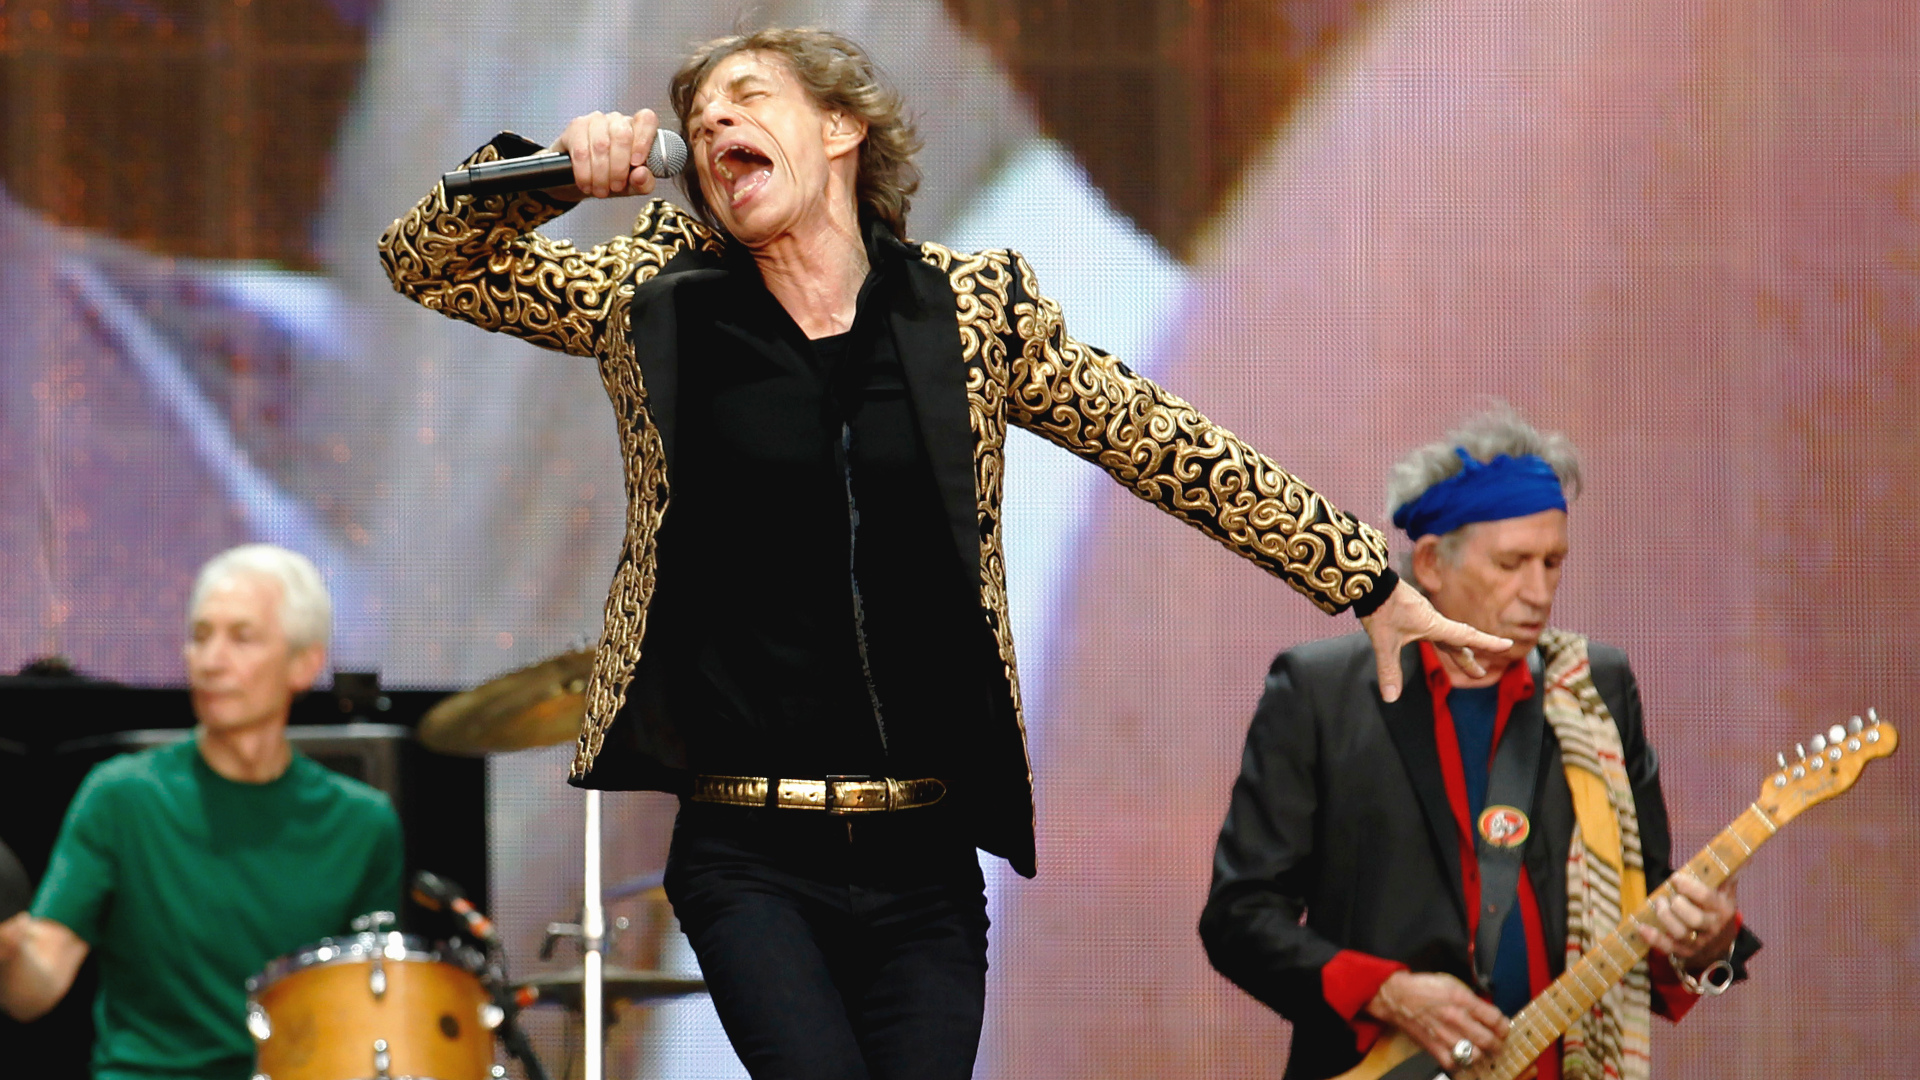 Handy-Wallpaper Musik, Die Rolling Stones kostenlos herunterladen.